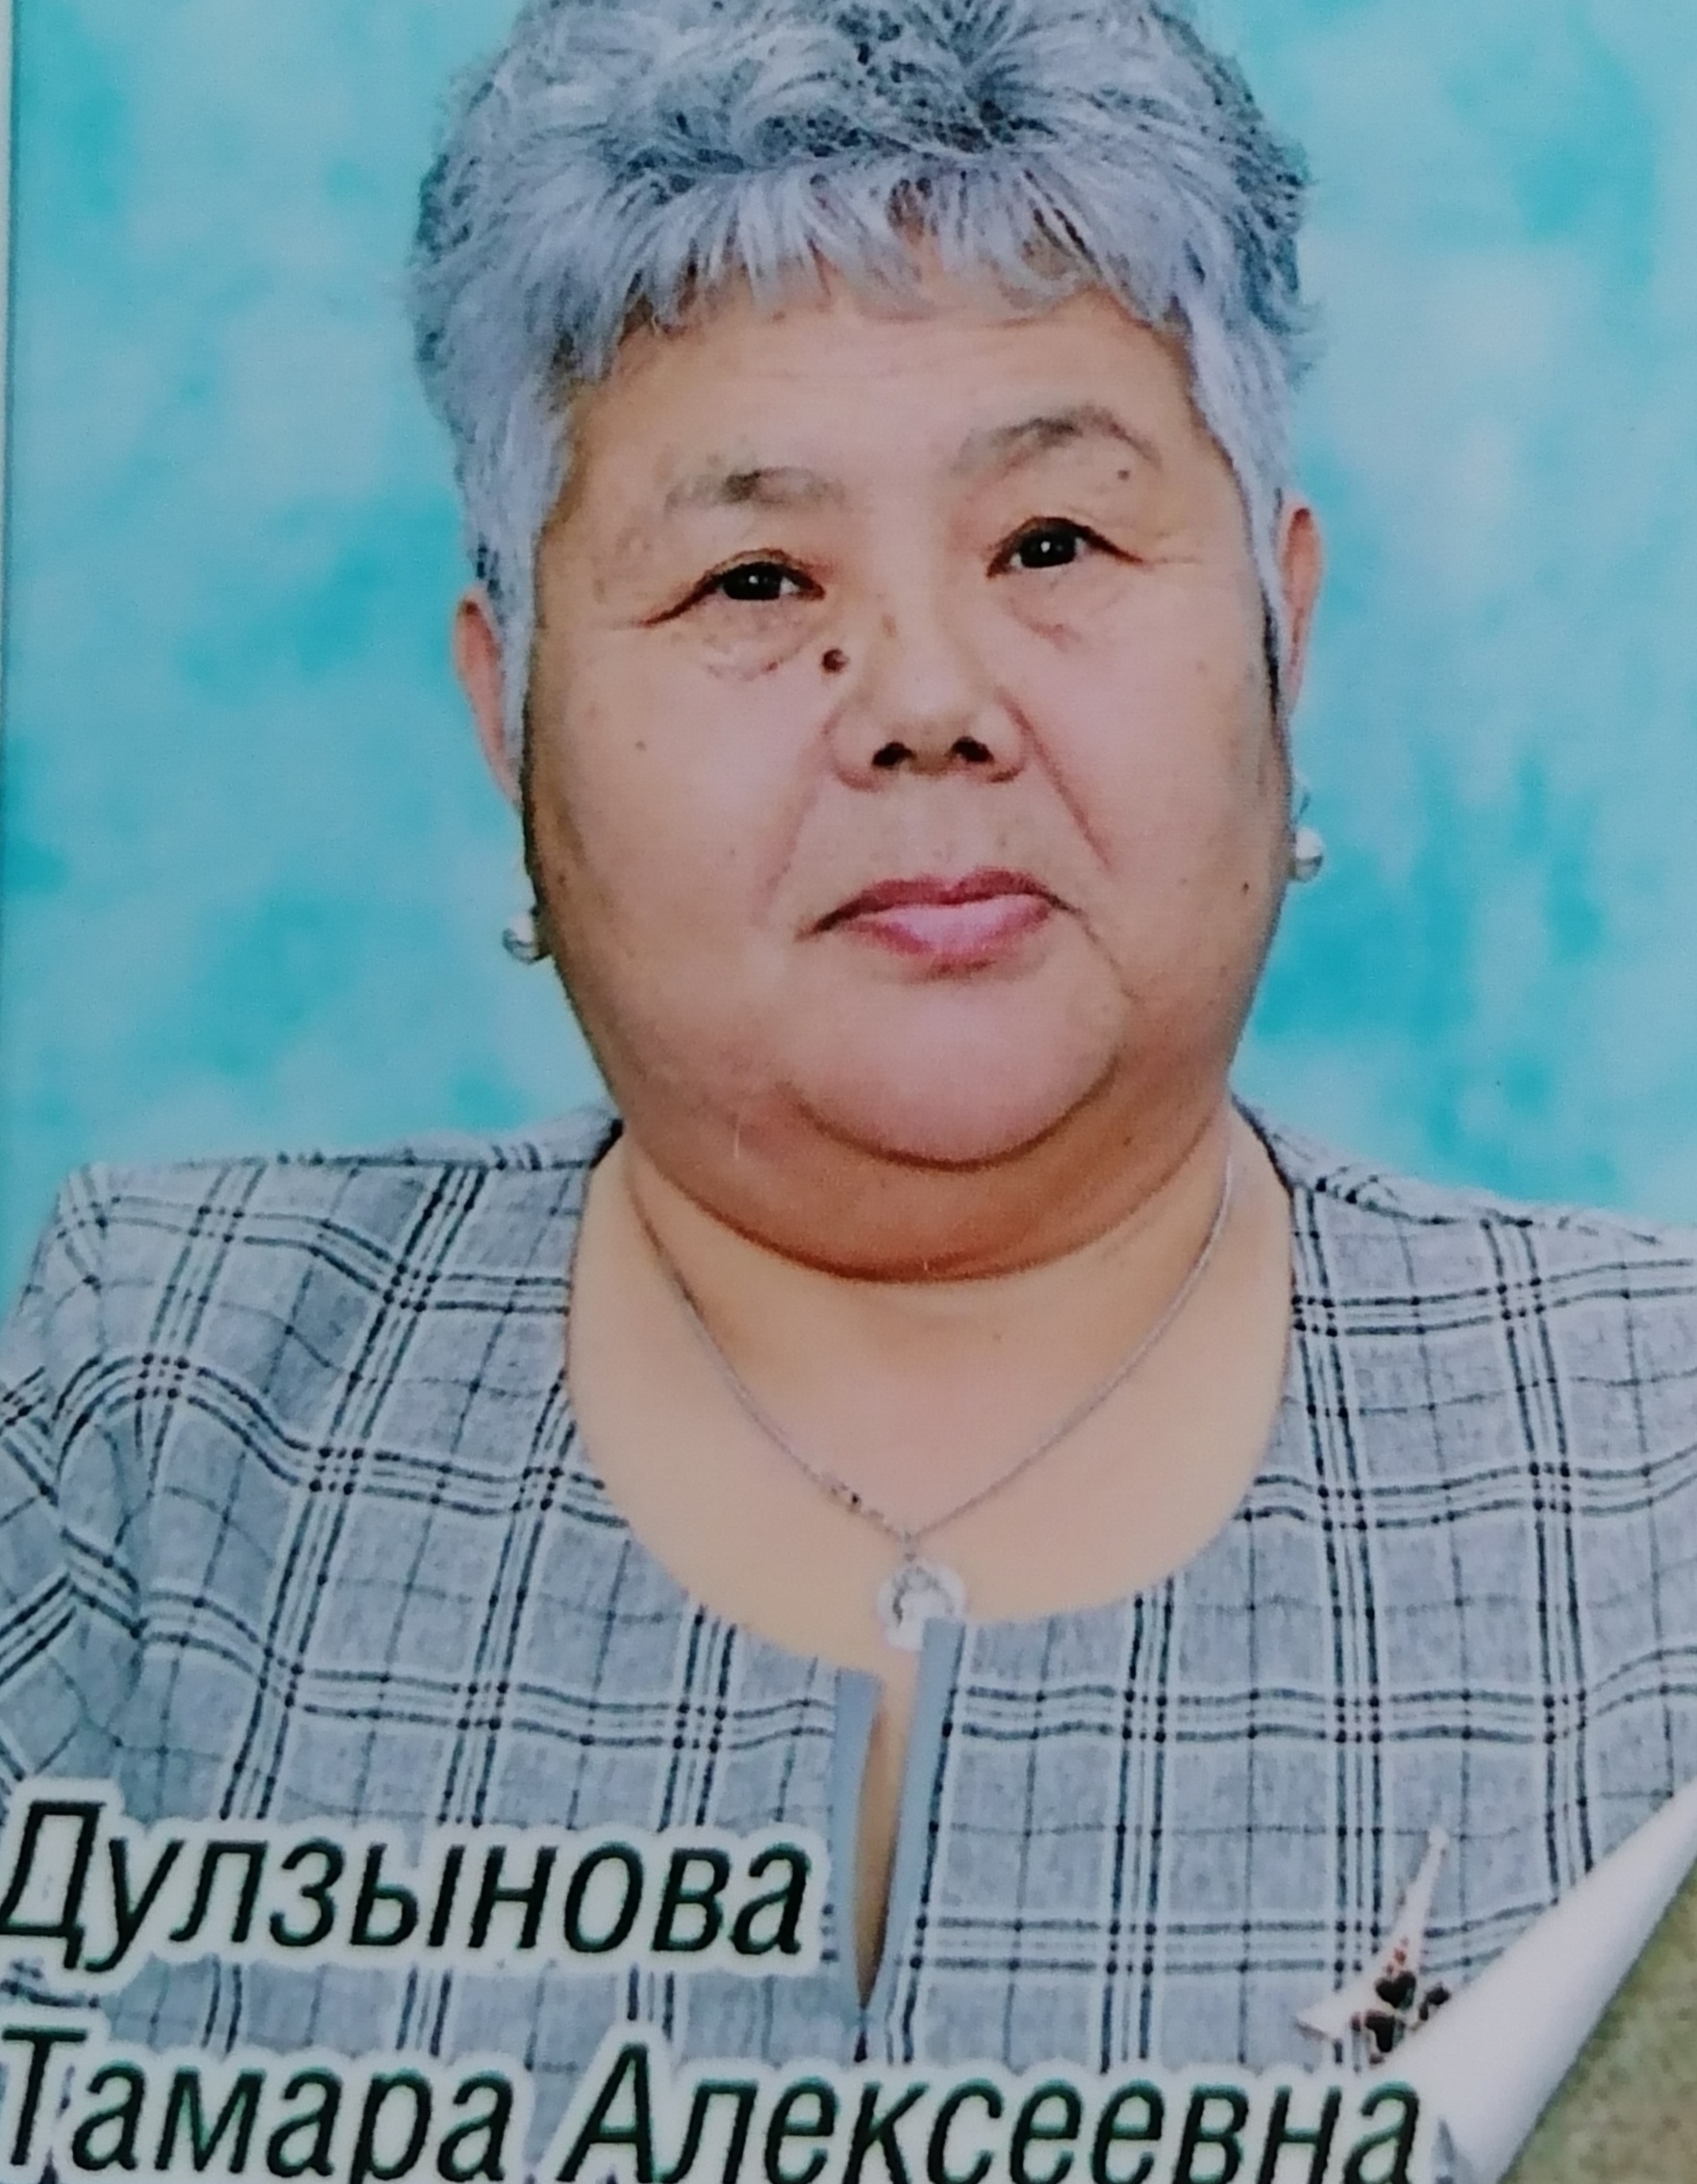 Дулзынова Тамара Алексеевна.